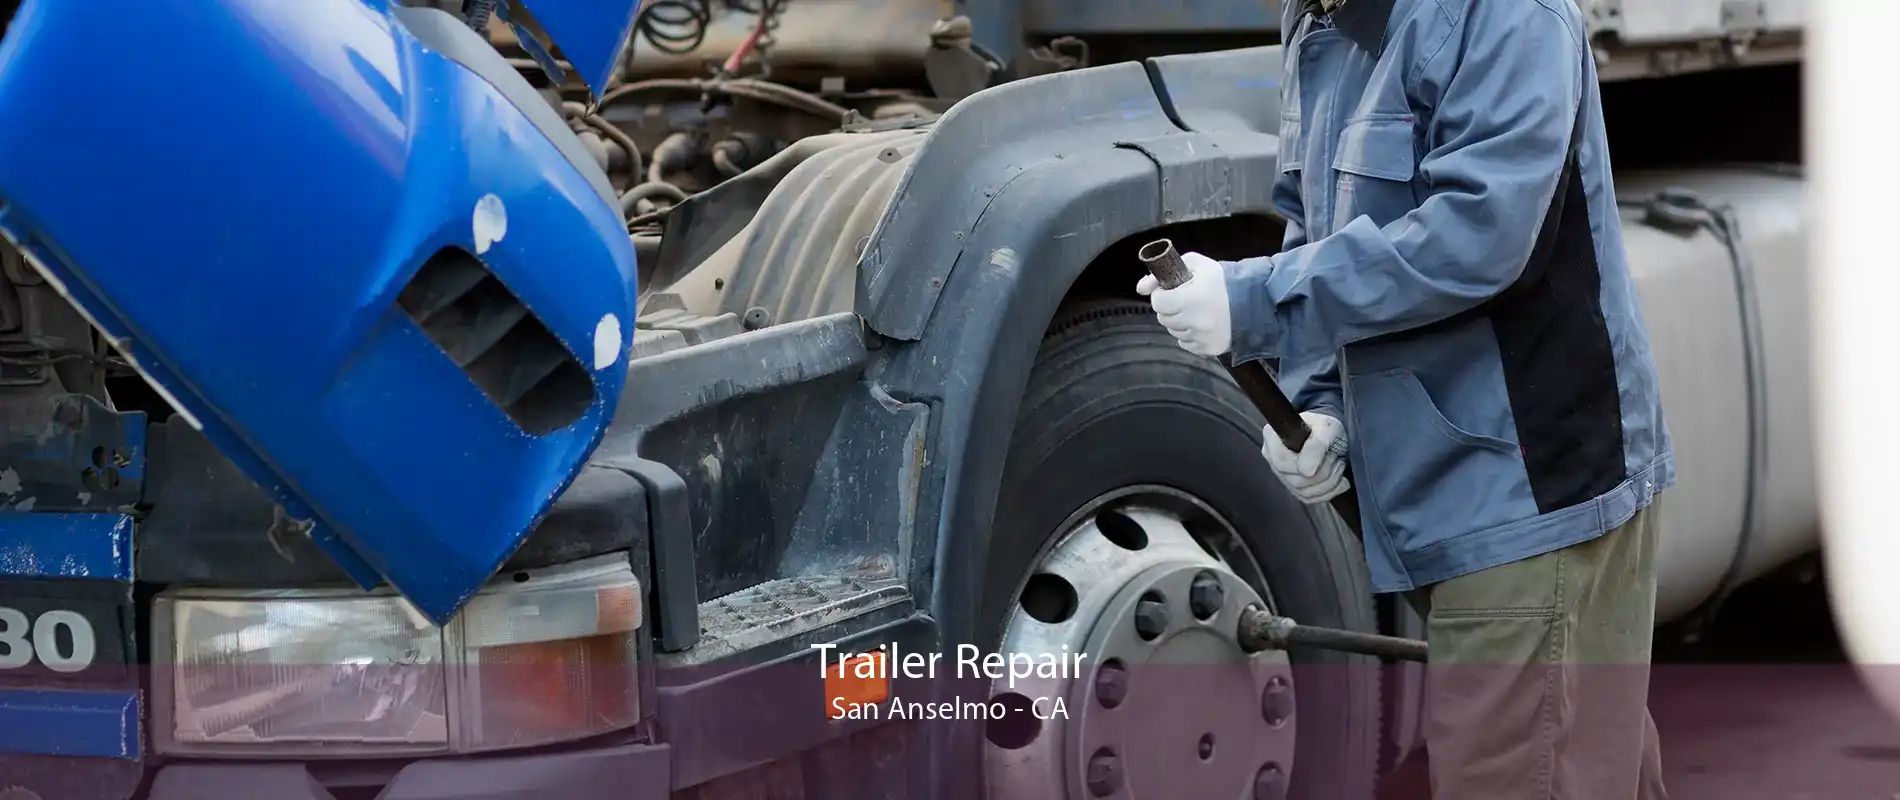 Trailer Repair San Anselmo - CA